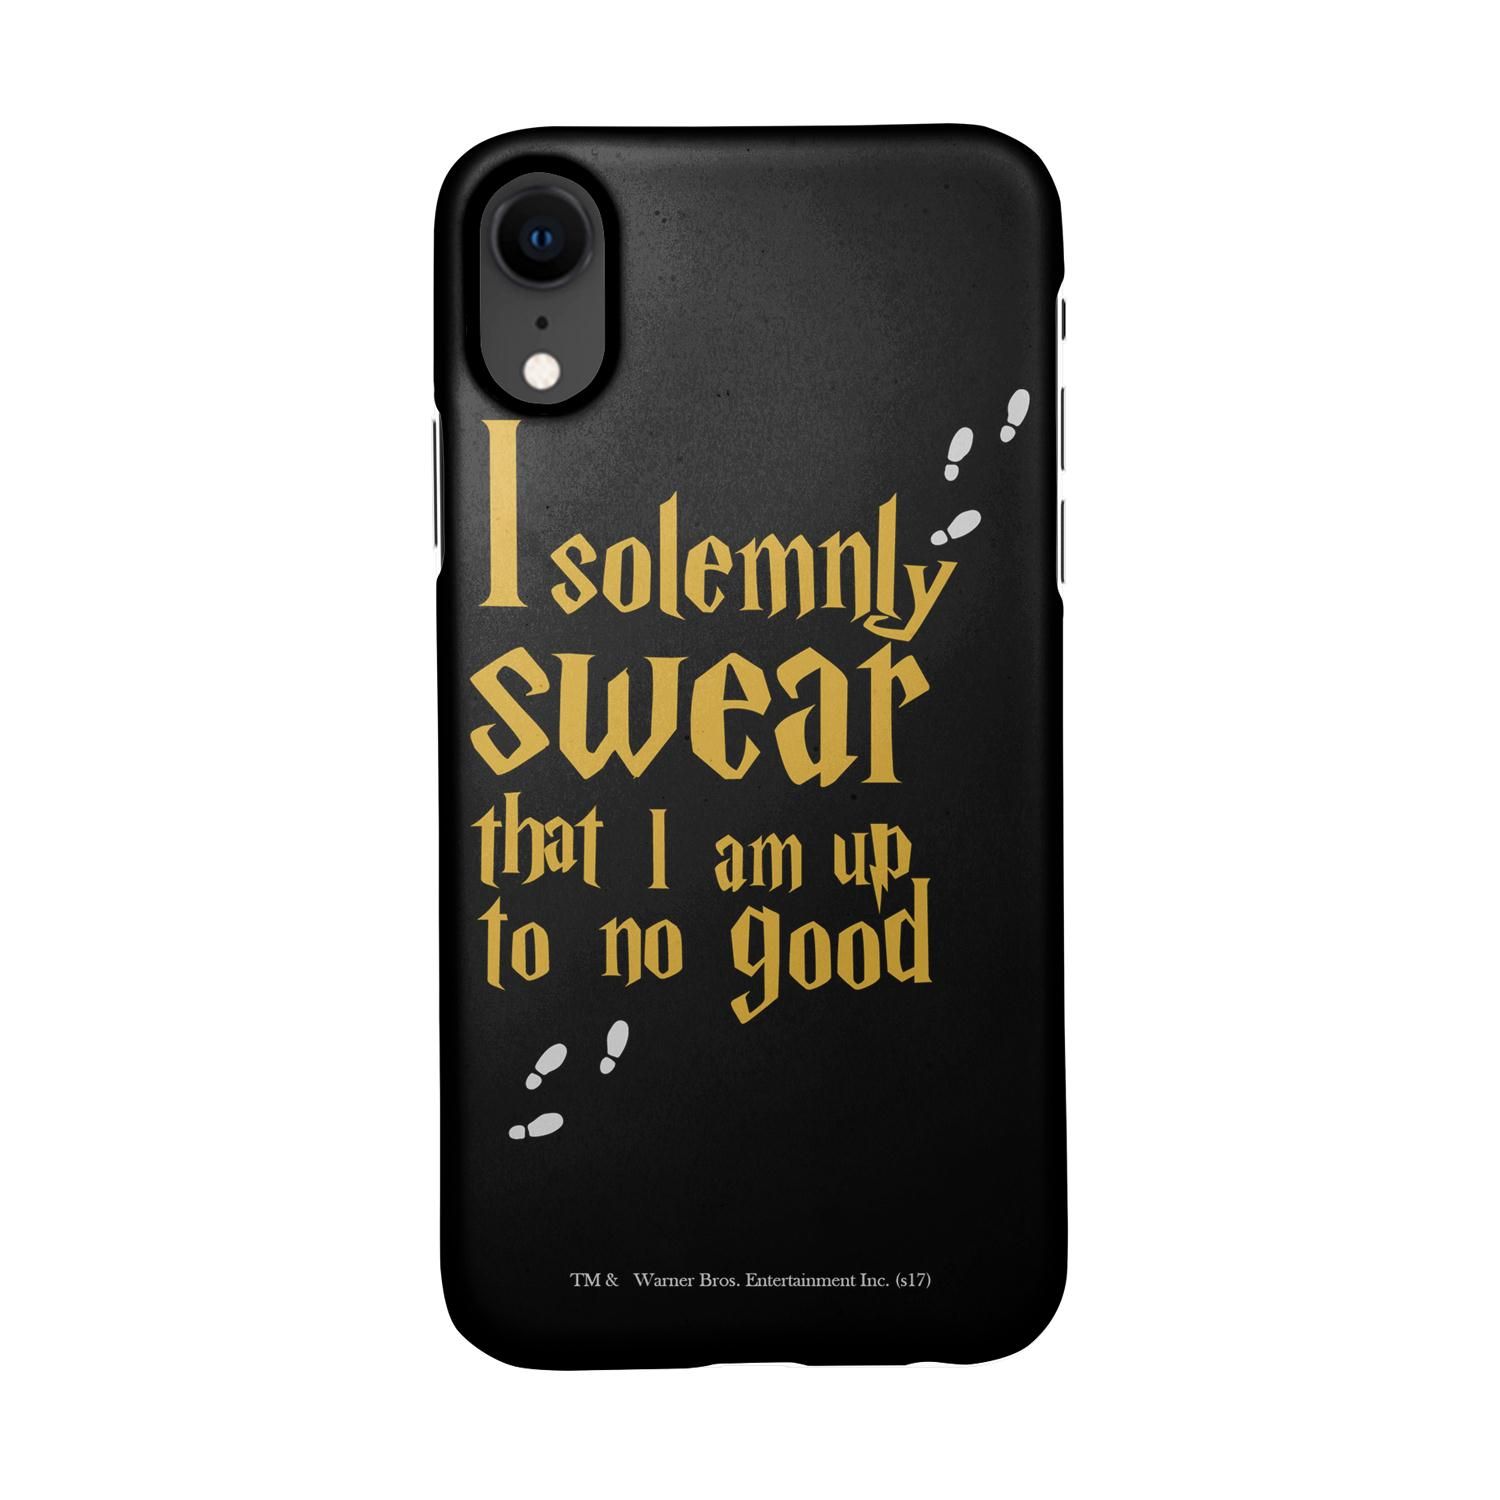 Buy Solemnly Swear - Sleek Phone Case for iPhone XR Online